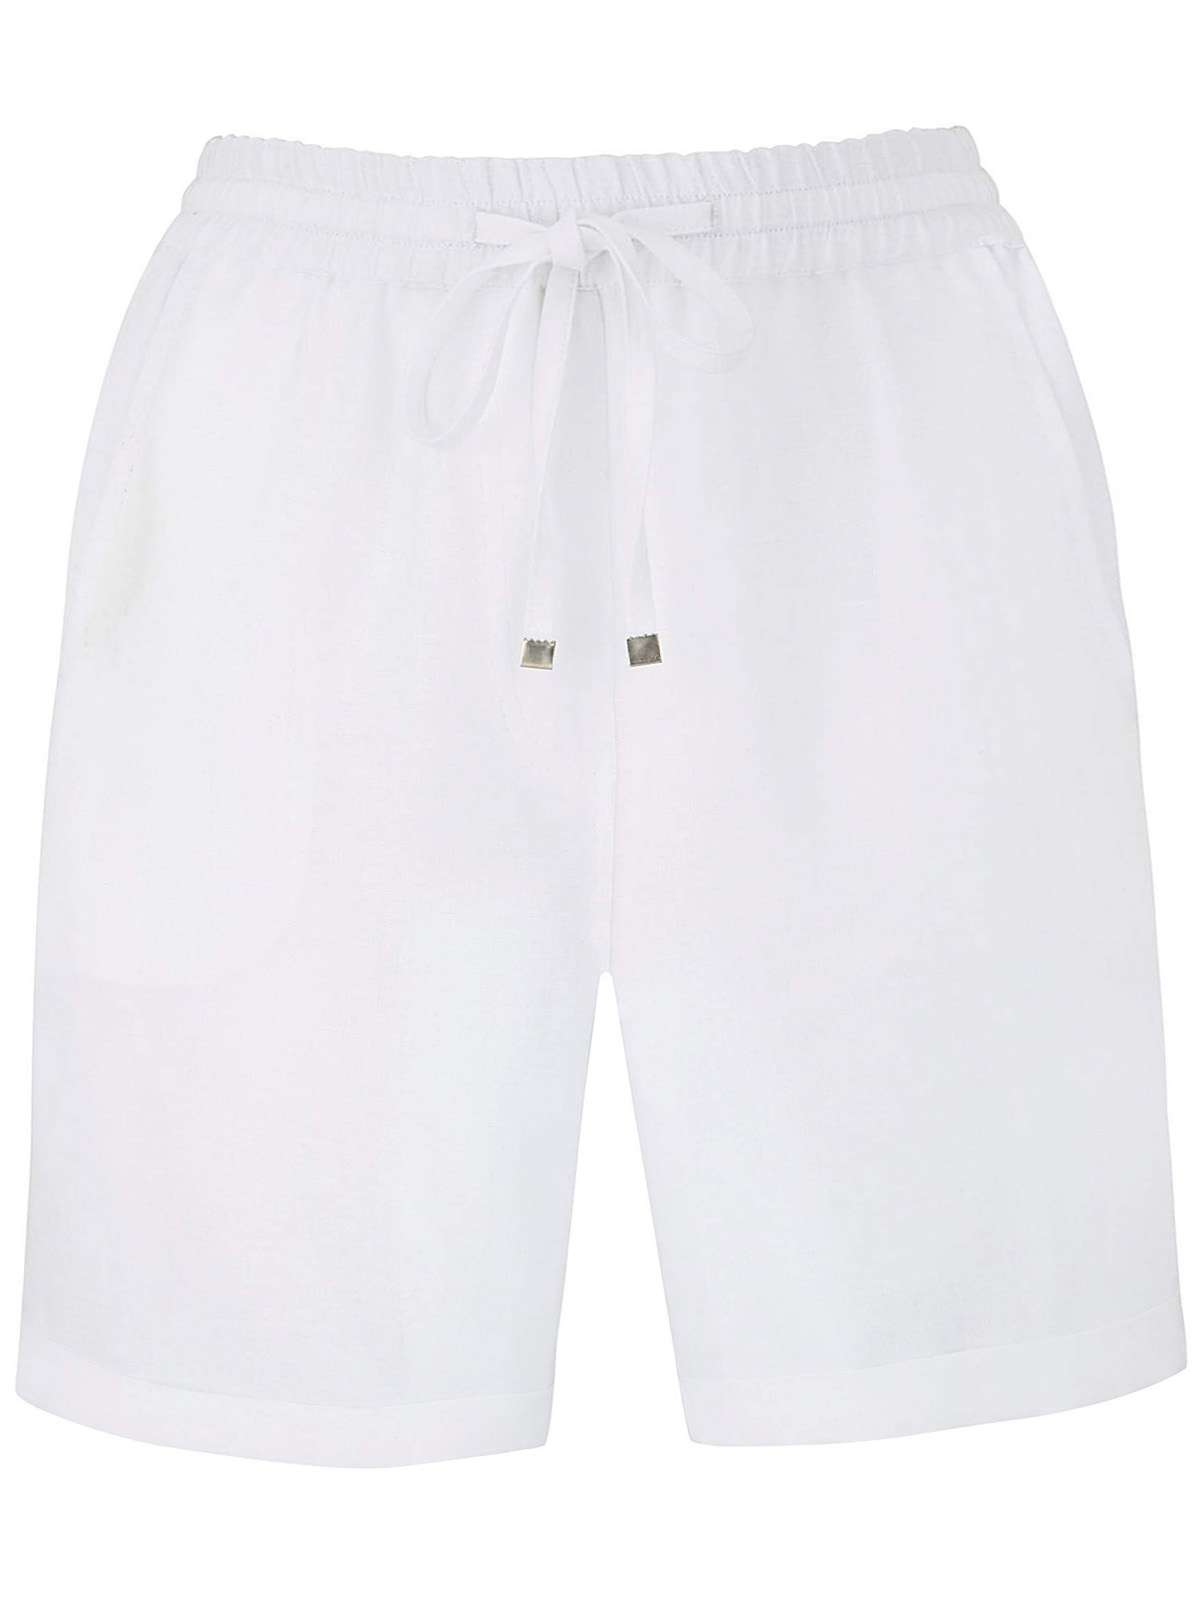 Capsule - - WHITE Linen Blend Pull On Shorts - Plus Size 26